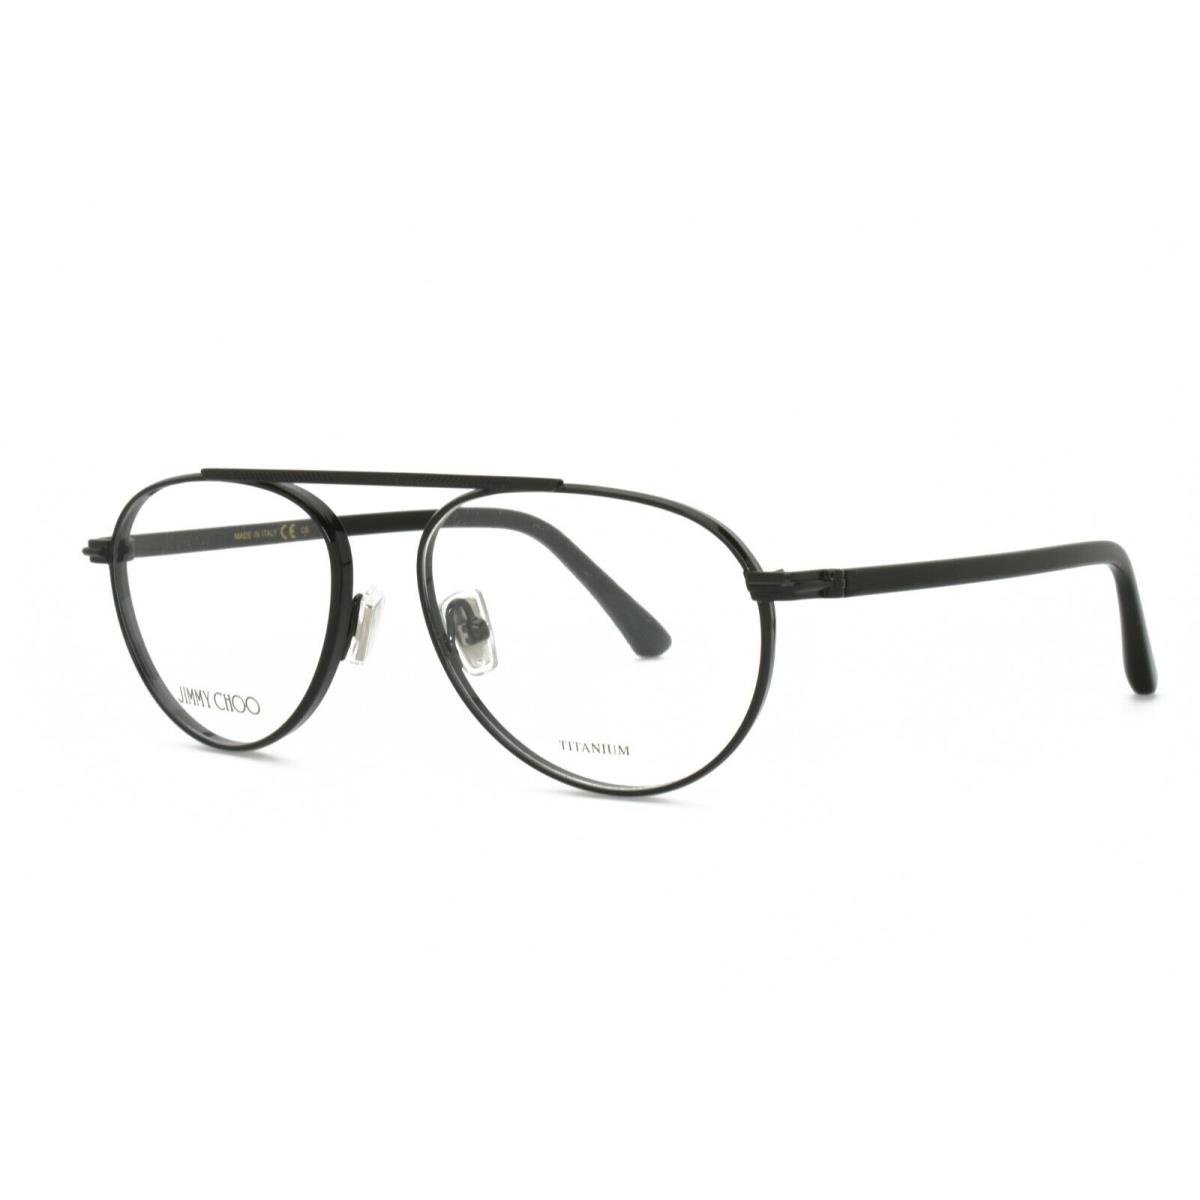 Jimmy Choo Unisex Titanium Eyeglasses JC 003 807 55-17-150 Black